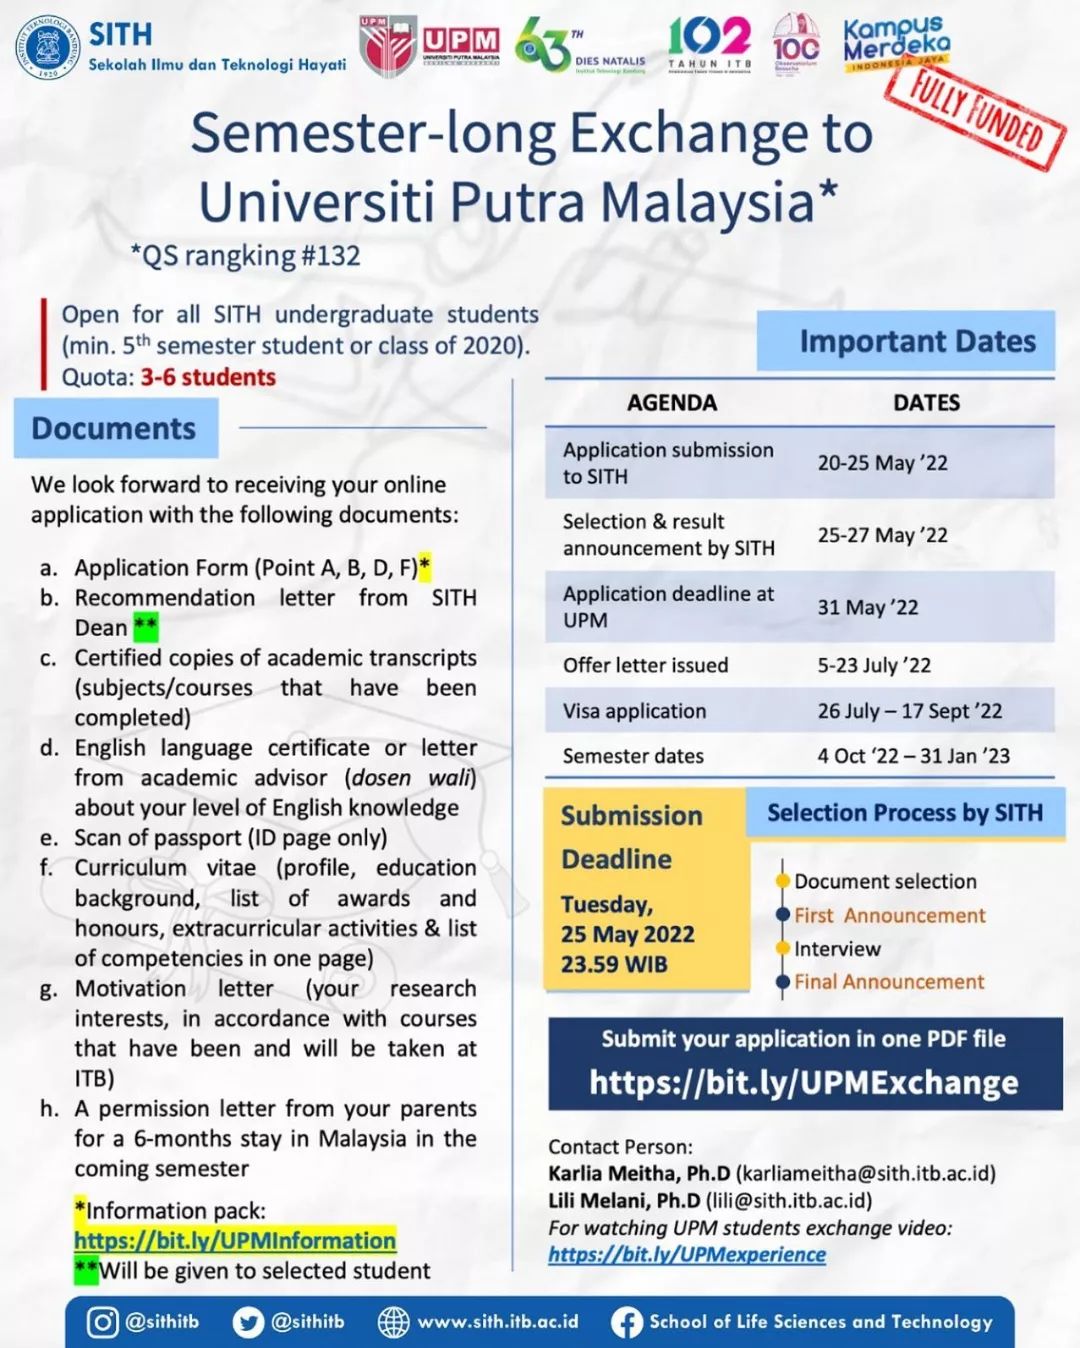 Semester-Long Exchange to Universiti Putra Malaysia (UPM)